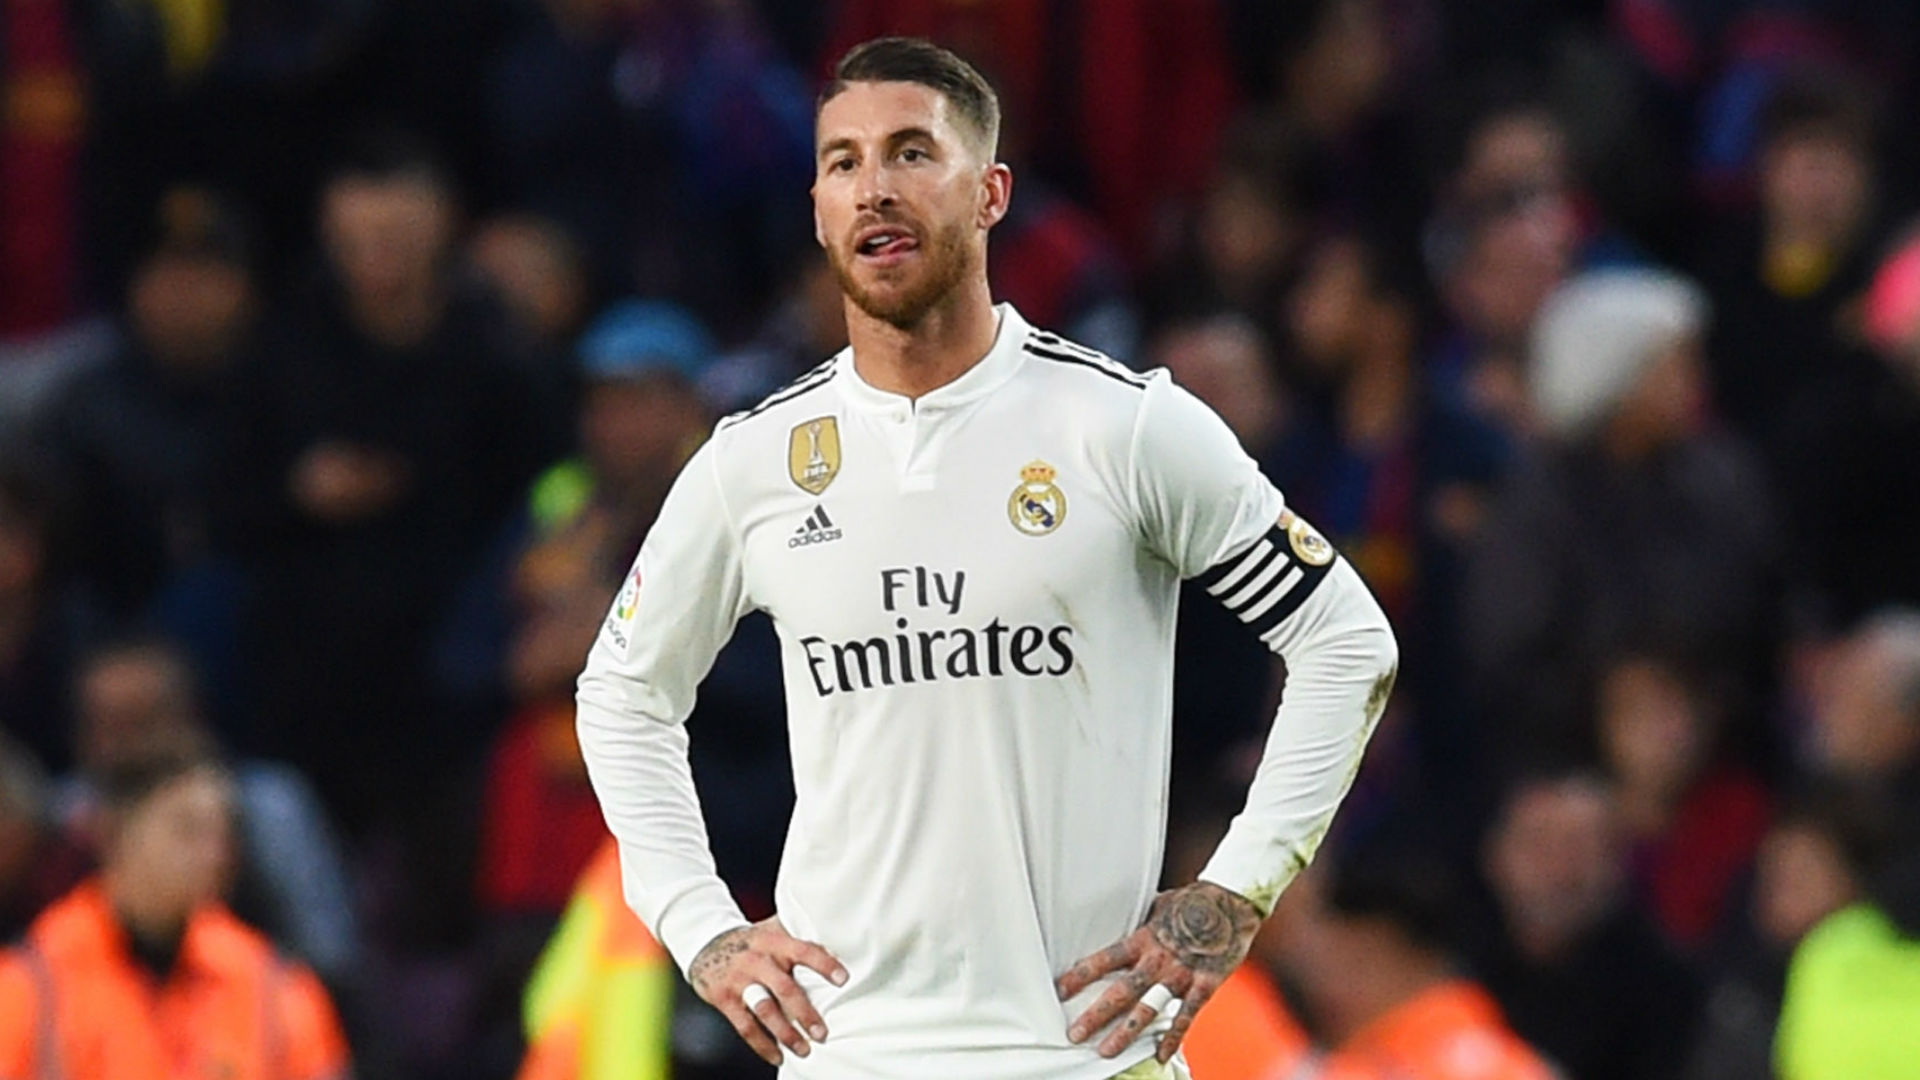 Le Real Madrid zappe Koulibaly et identifie le remplaçant de Sergio Ramos